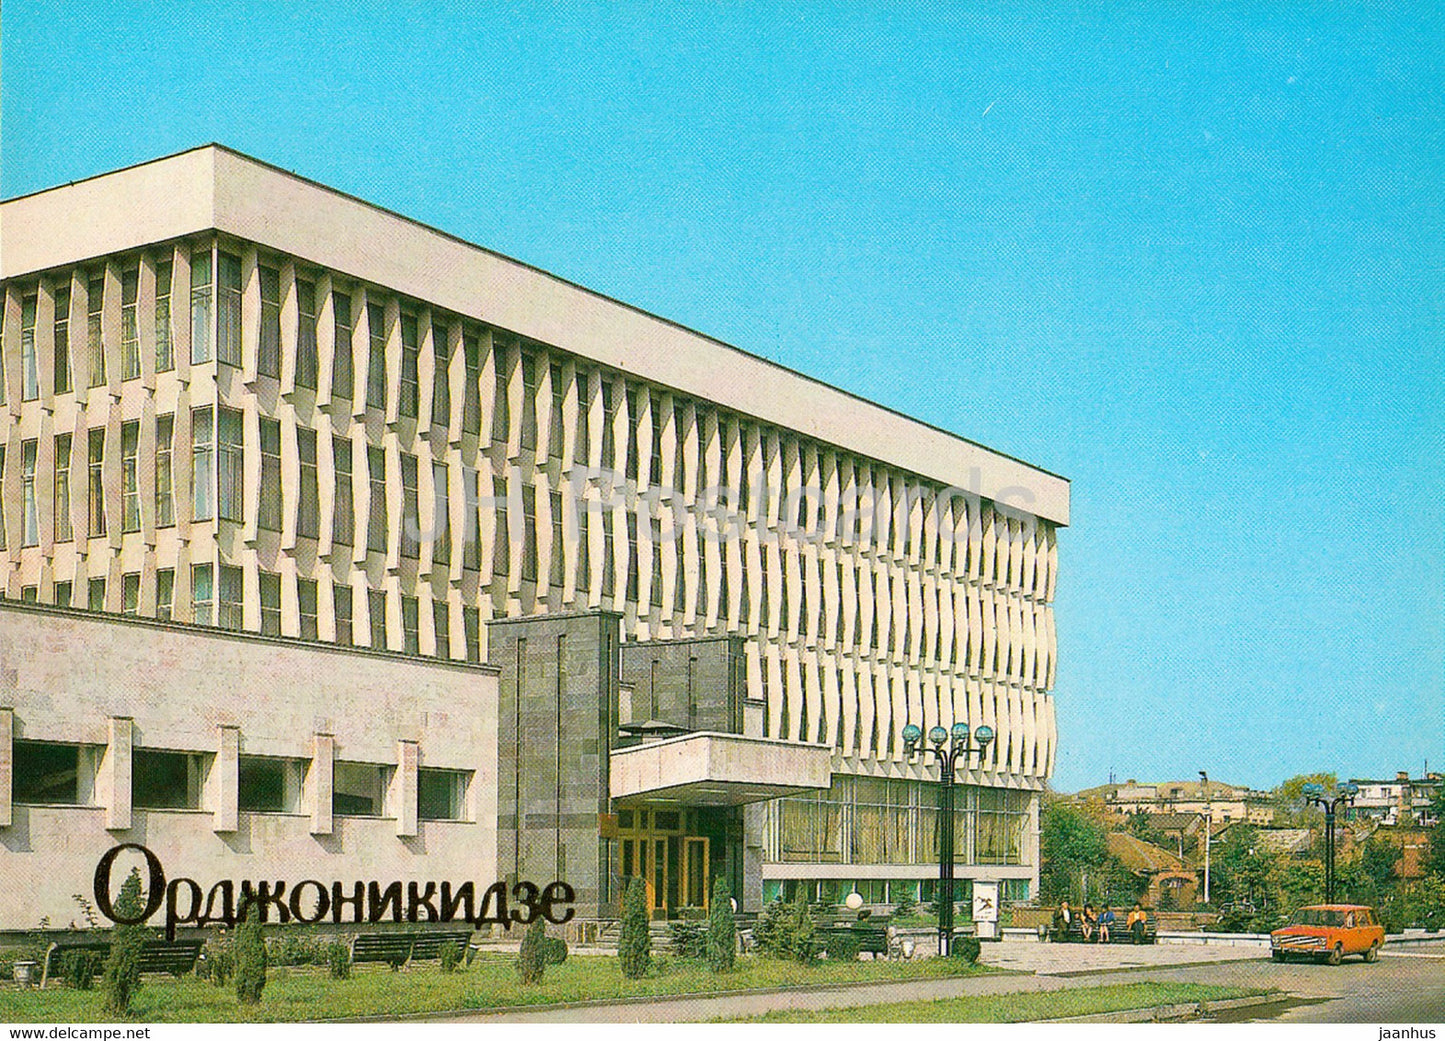 Vladikavkaz - Ordzhonikidze - Kirov Science Library - Ossetia - 1984 - Russia USSR - unused - JH Postcards